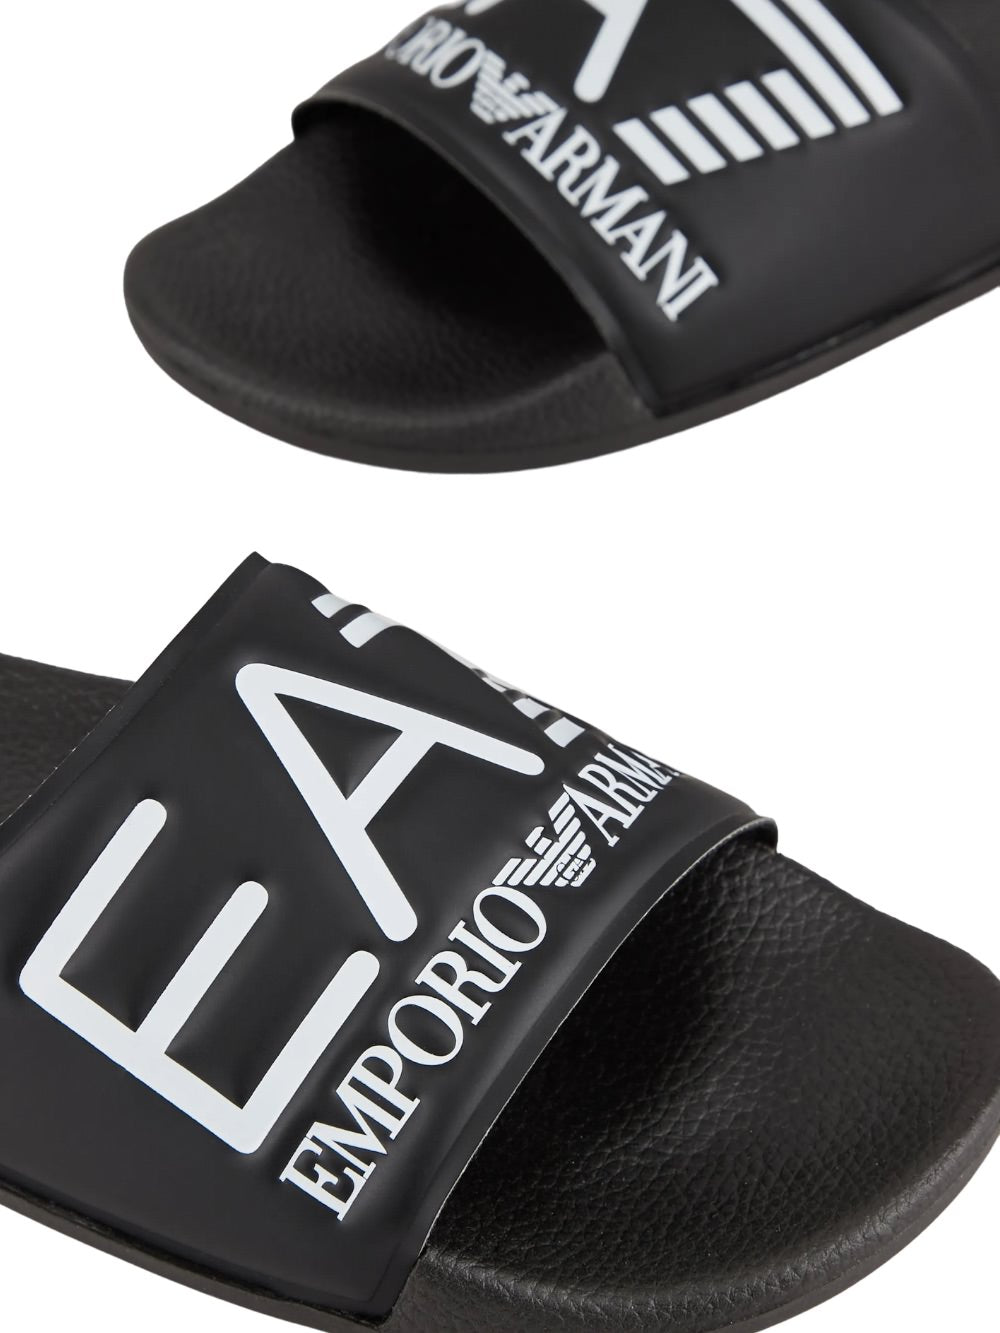 Xcp001 Black slippers